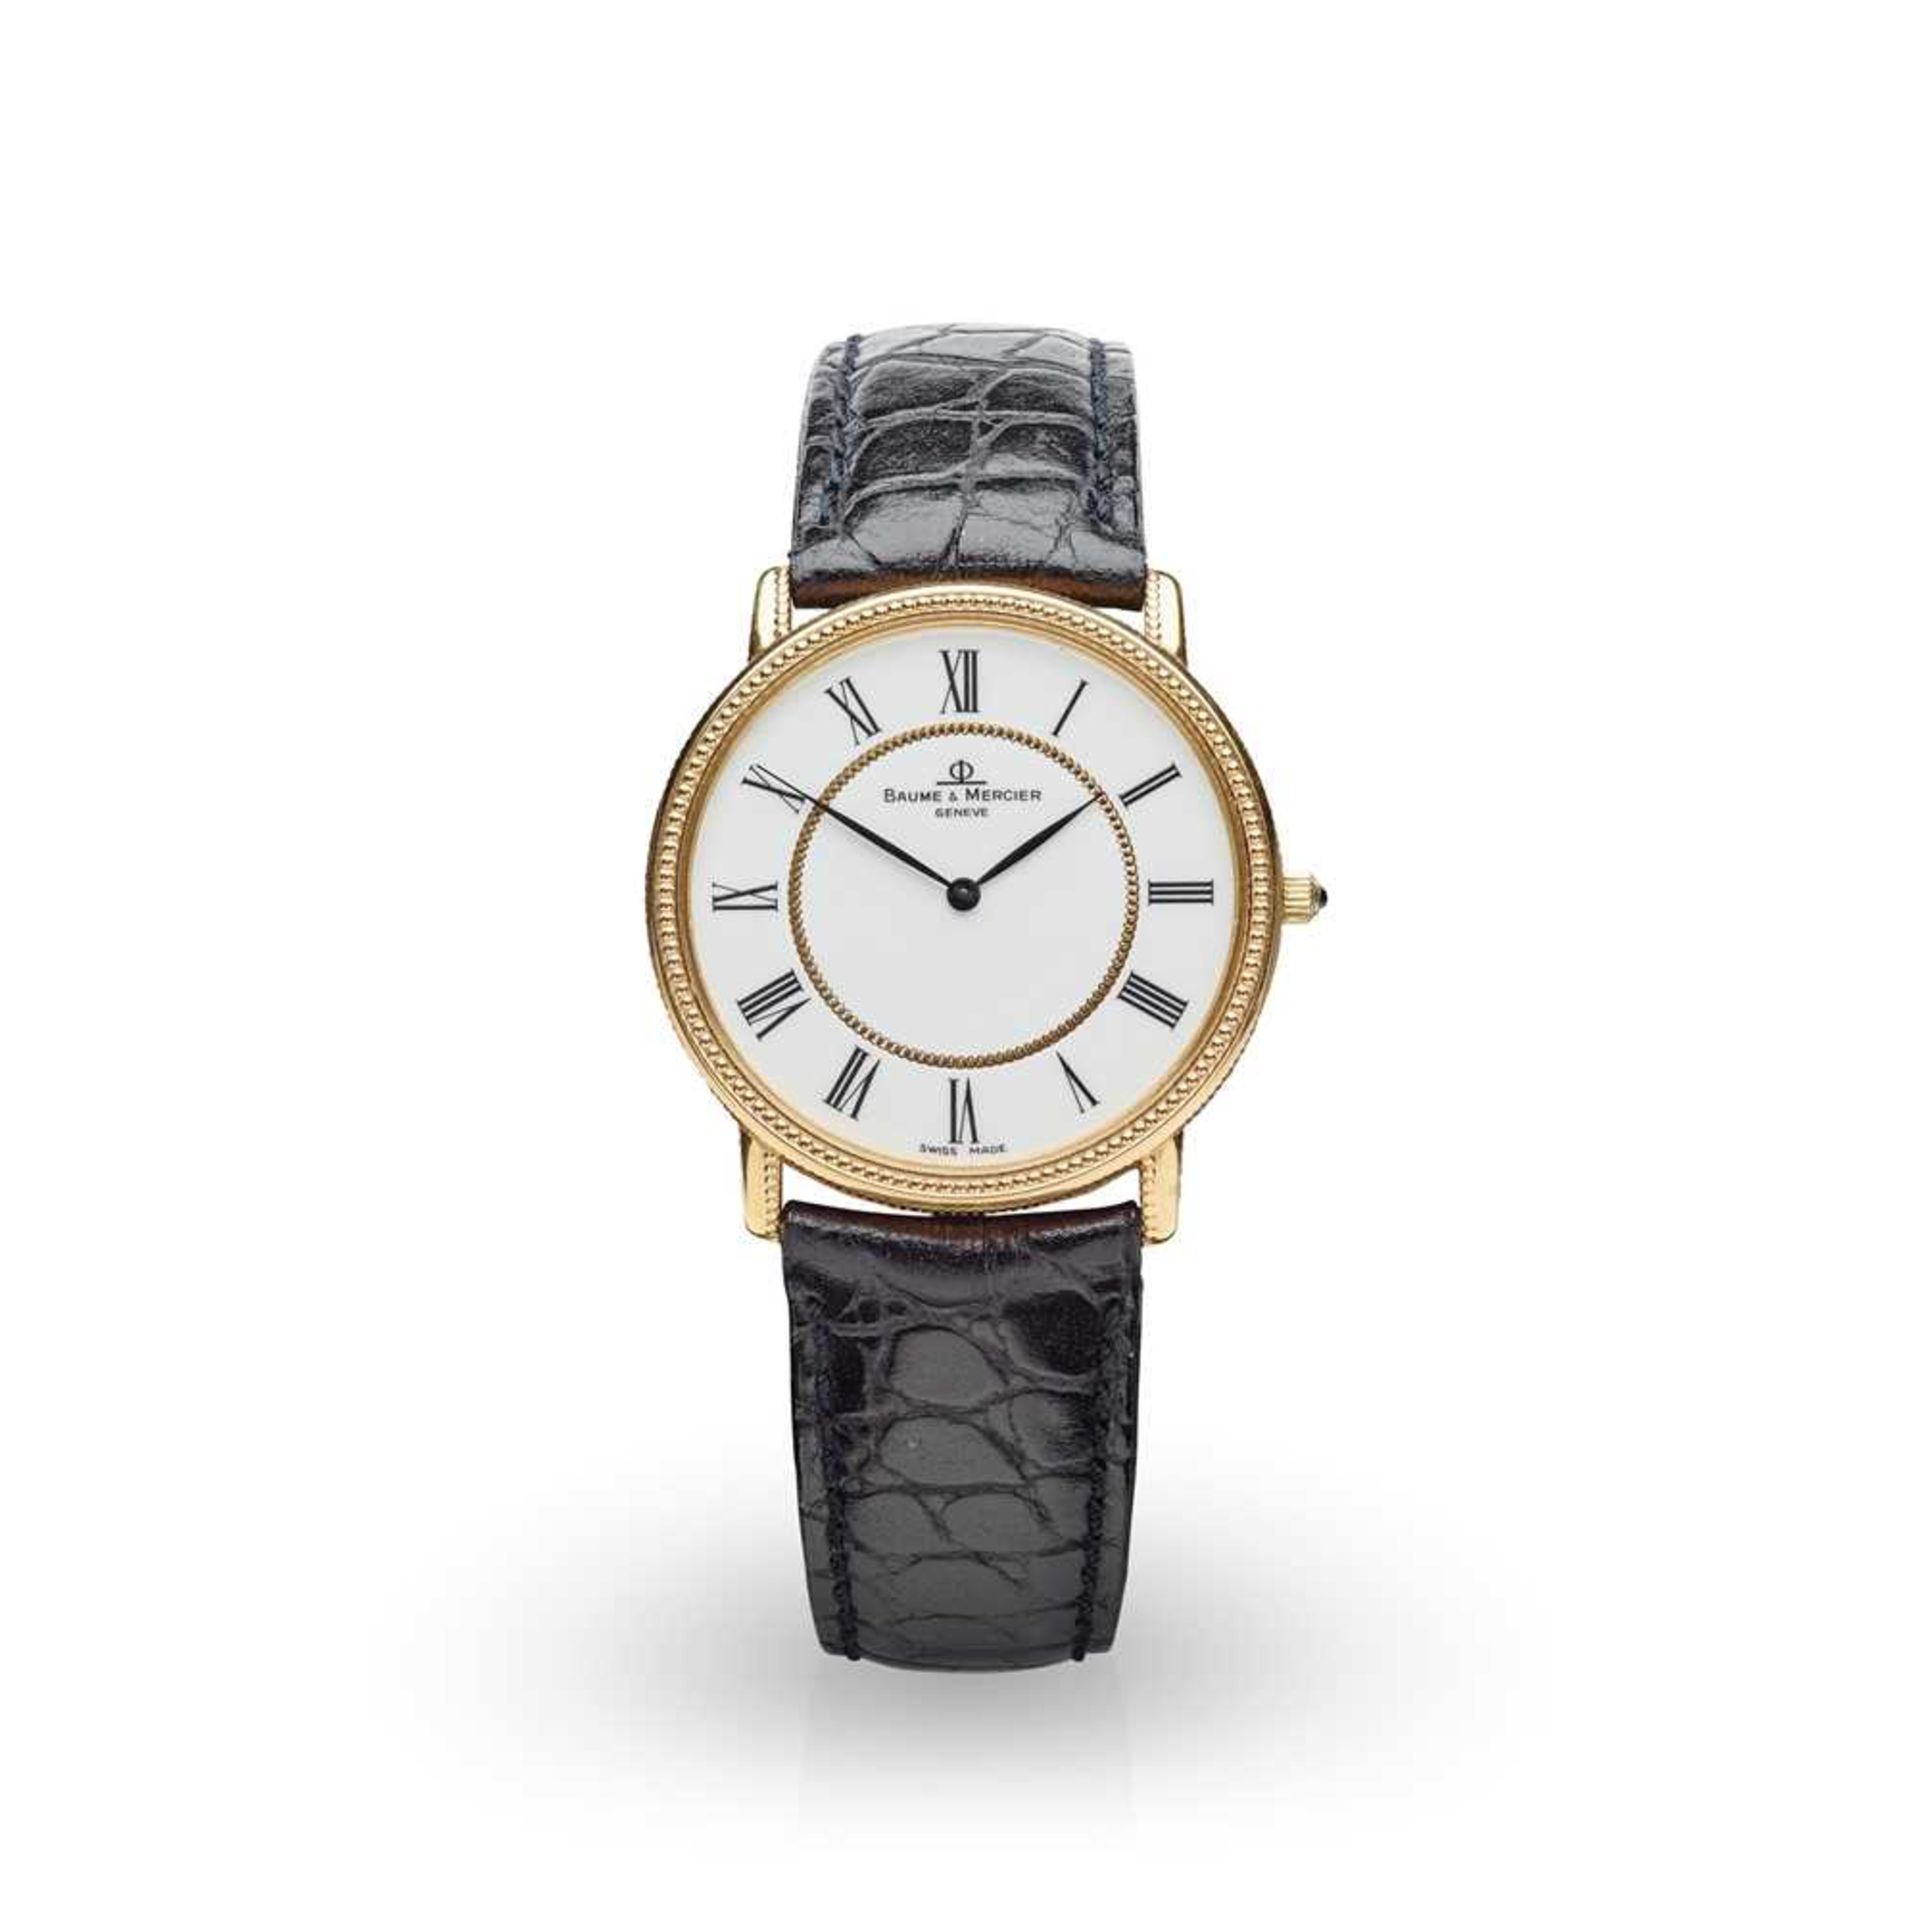 Baume & Mercier: a quartz wrist watch